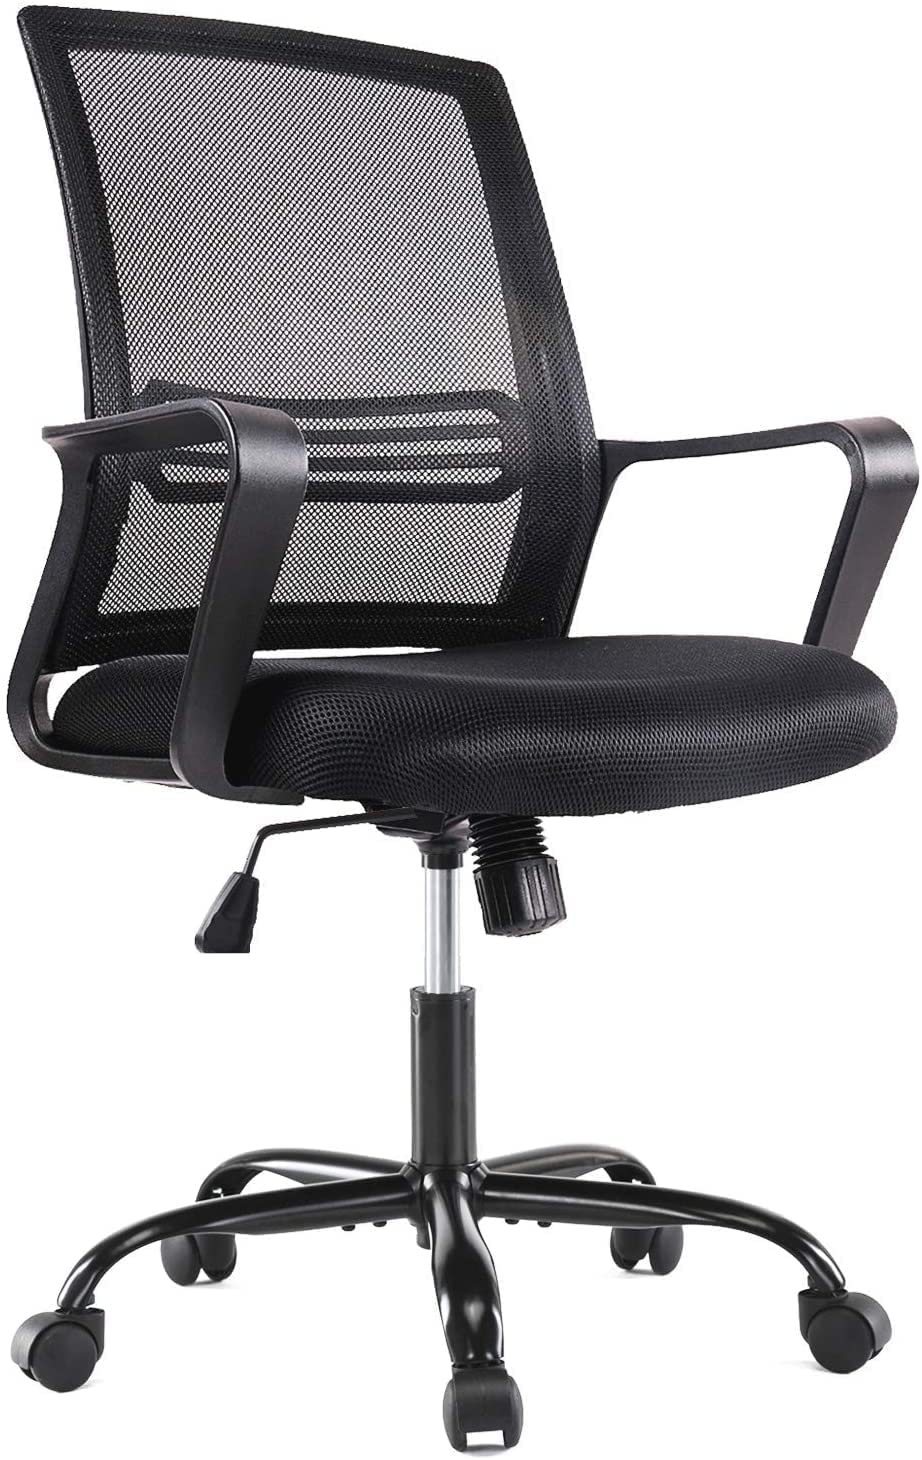 Ergonomic office chair